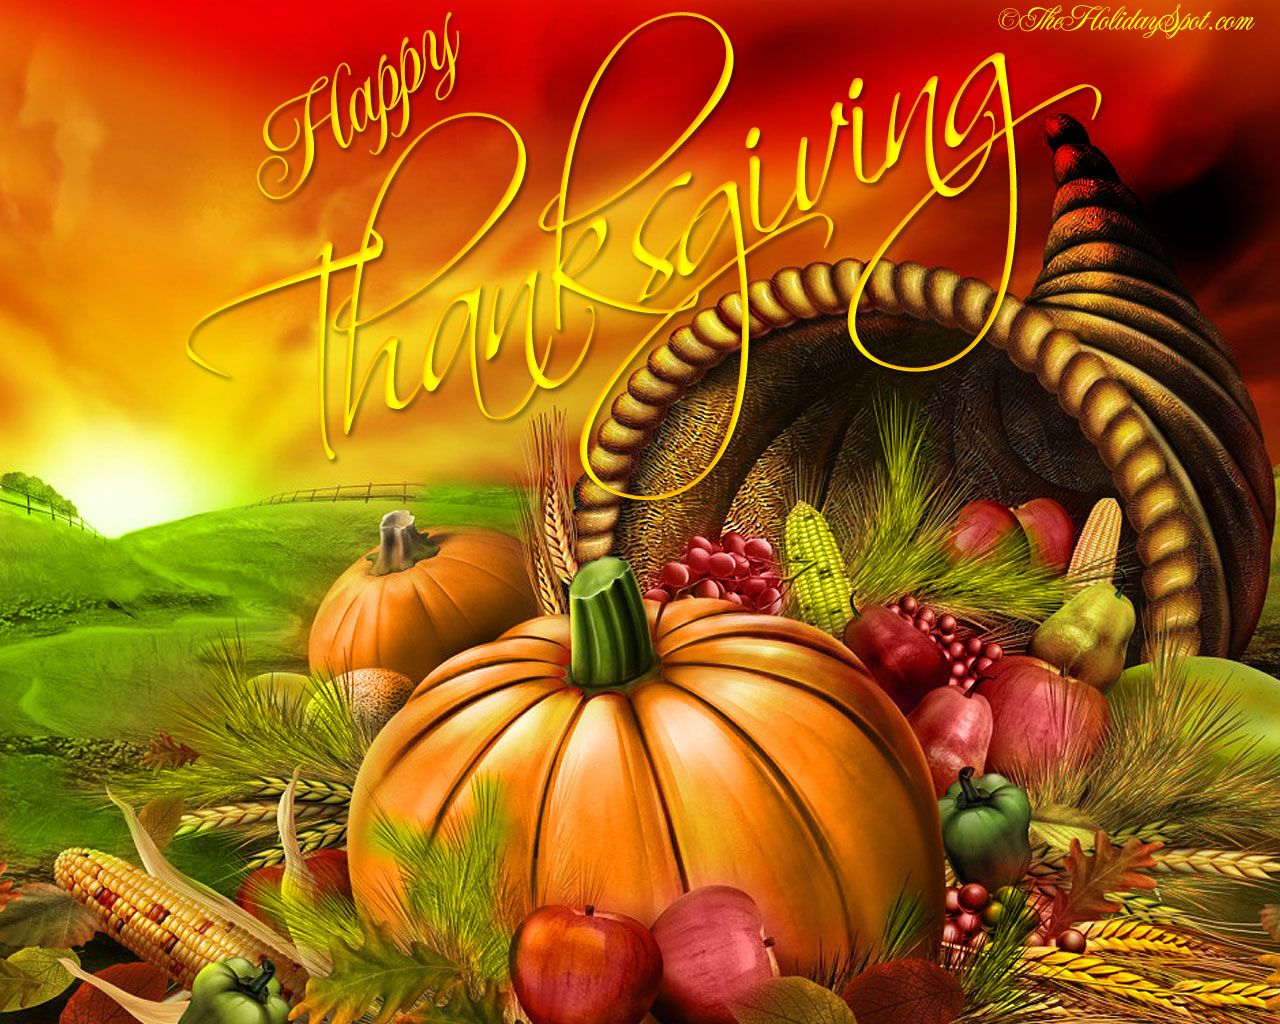 Background Thanksgiving Wallpaper